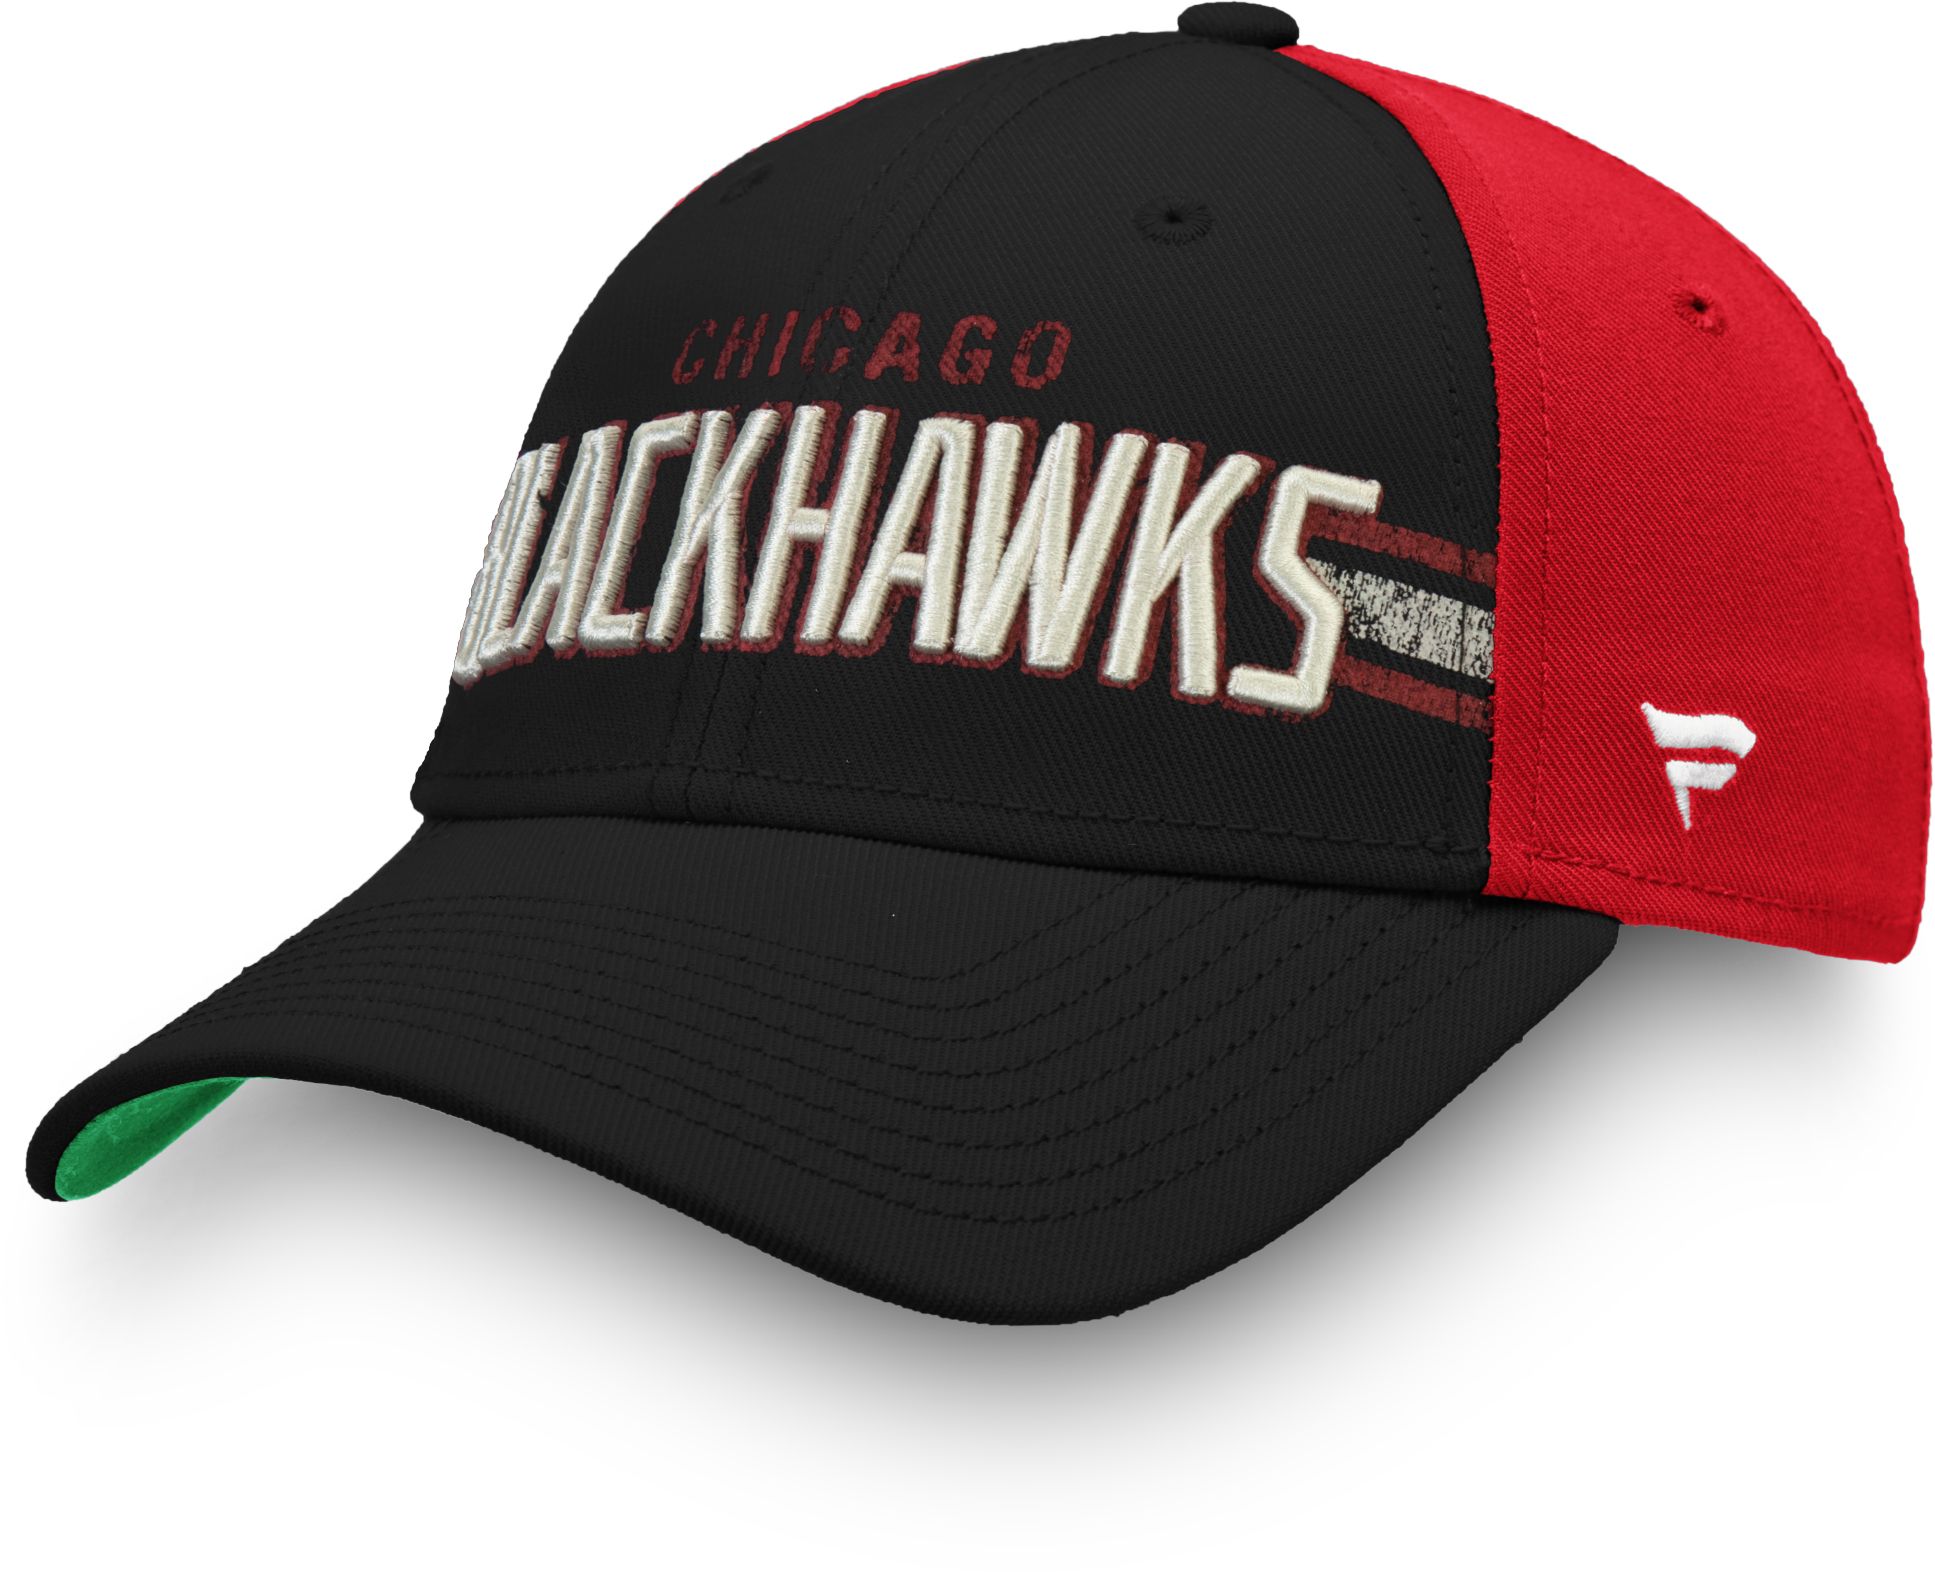 nhl blackhawks hat